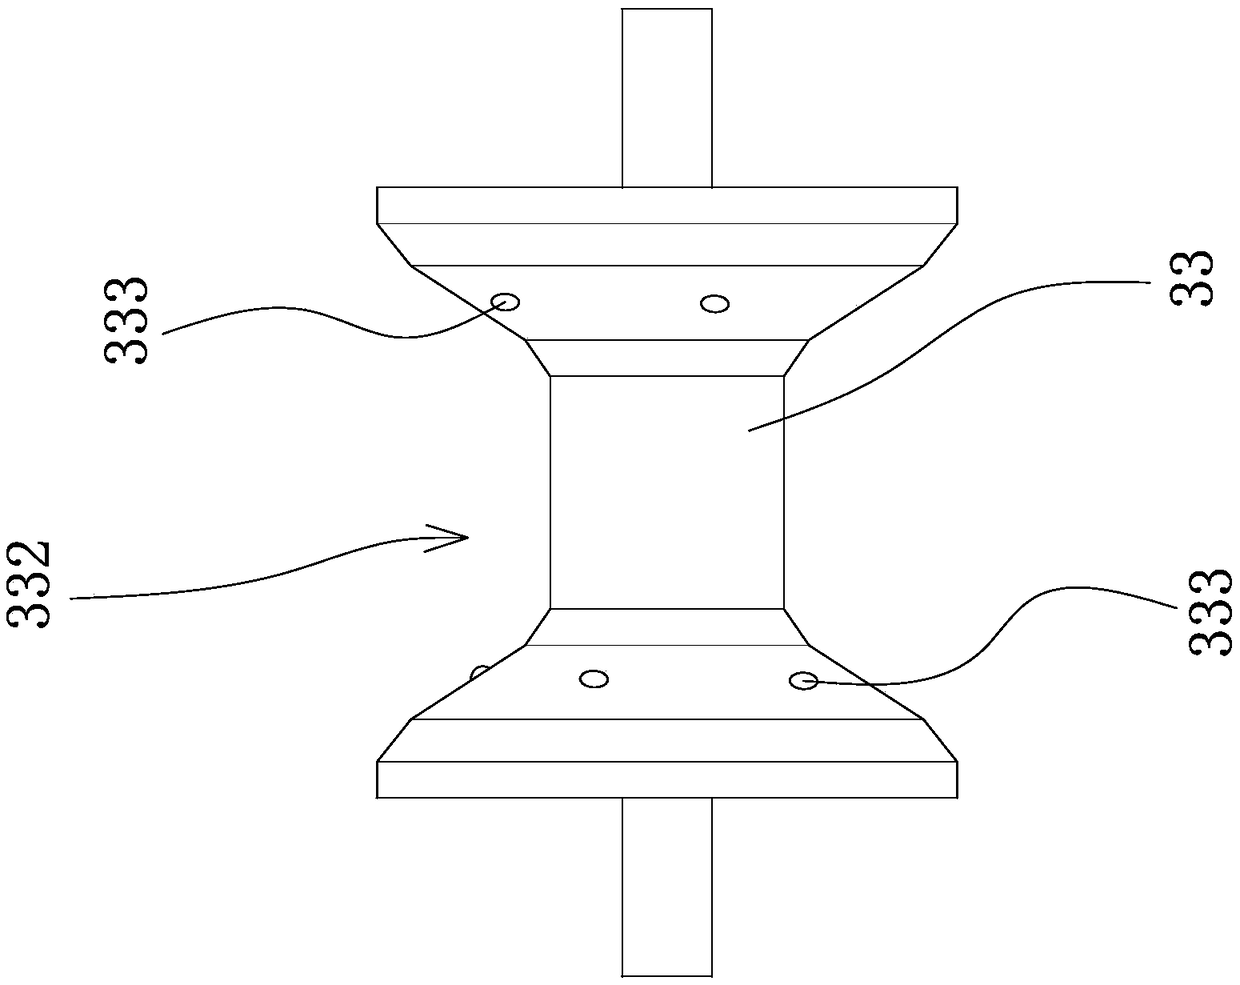 Vertical adjustment mechanism for serving channel in tennis ball serving machine